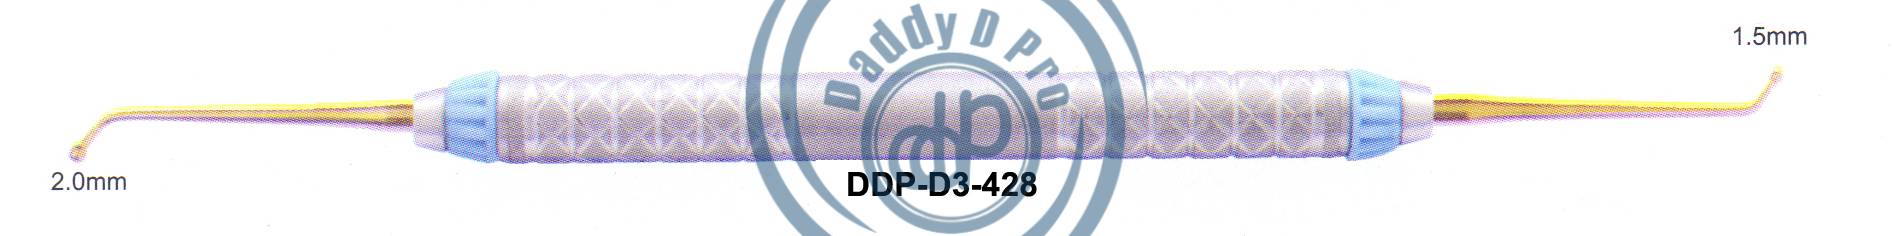 images/DDP-D3-428.png